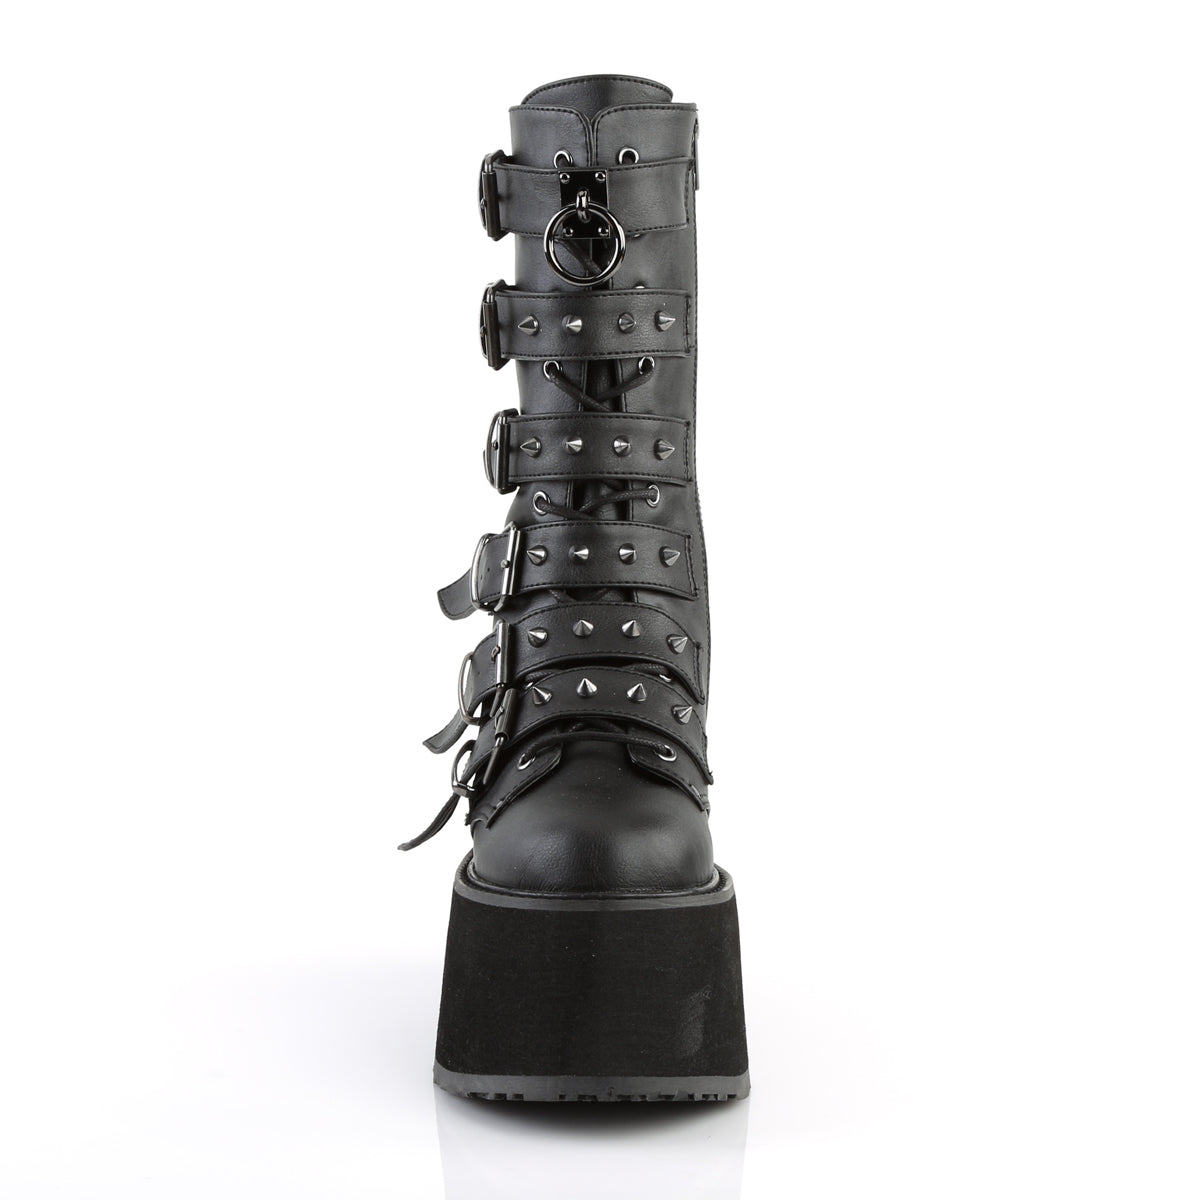 DAMNED-225 Demonia Black Vegan Leather Women's Mid-Calf & Knee High Boots [Demonia Cult Alternative Footwear]